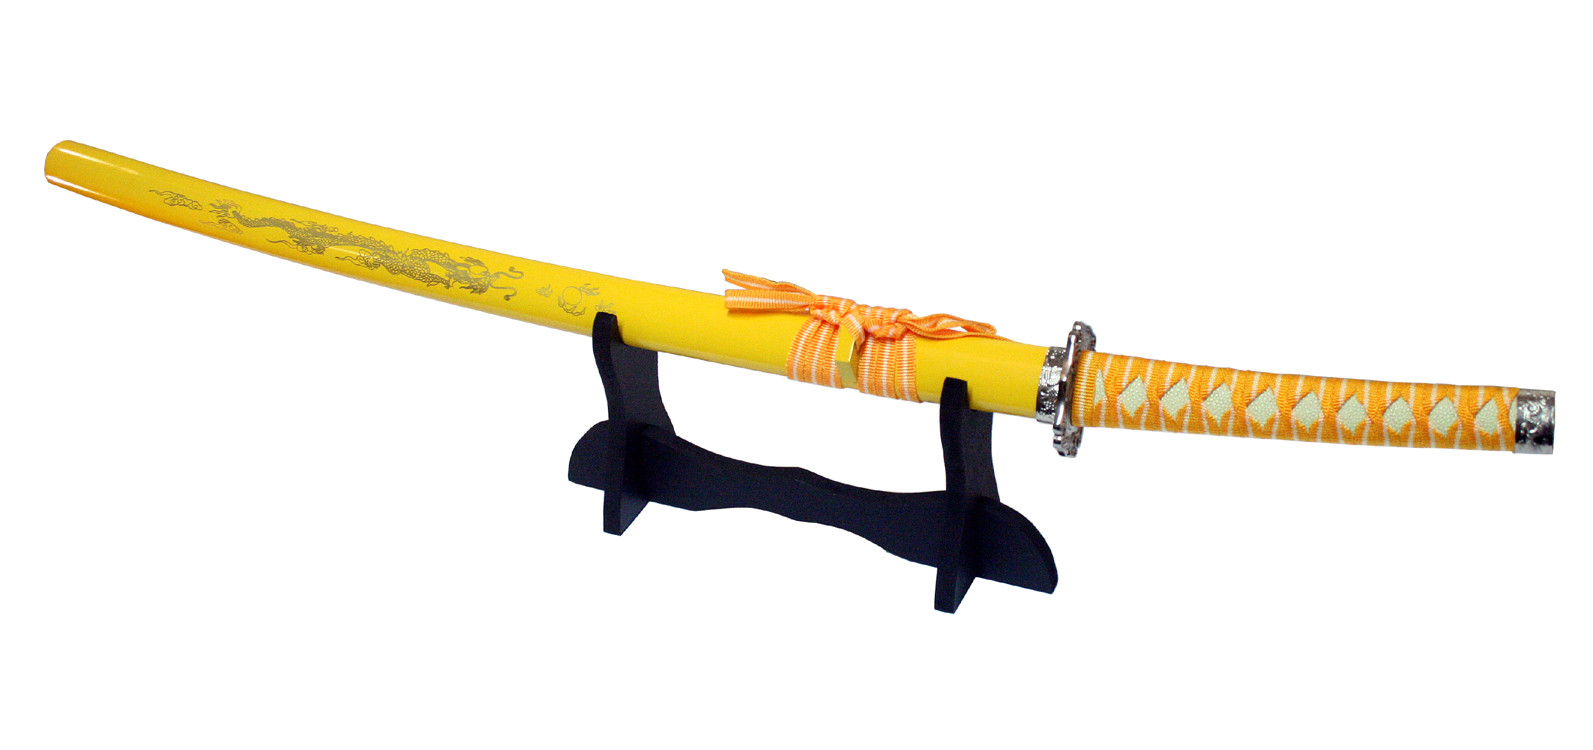 39.5 in. Sword Yellow & Orange Dragon Design Samurai Katana with Stand